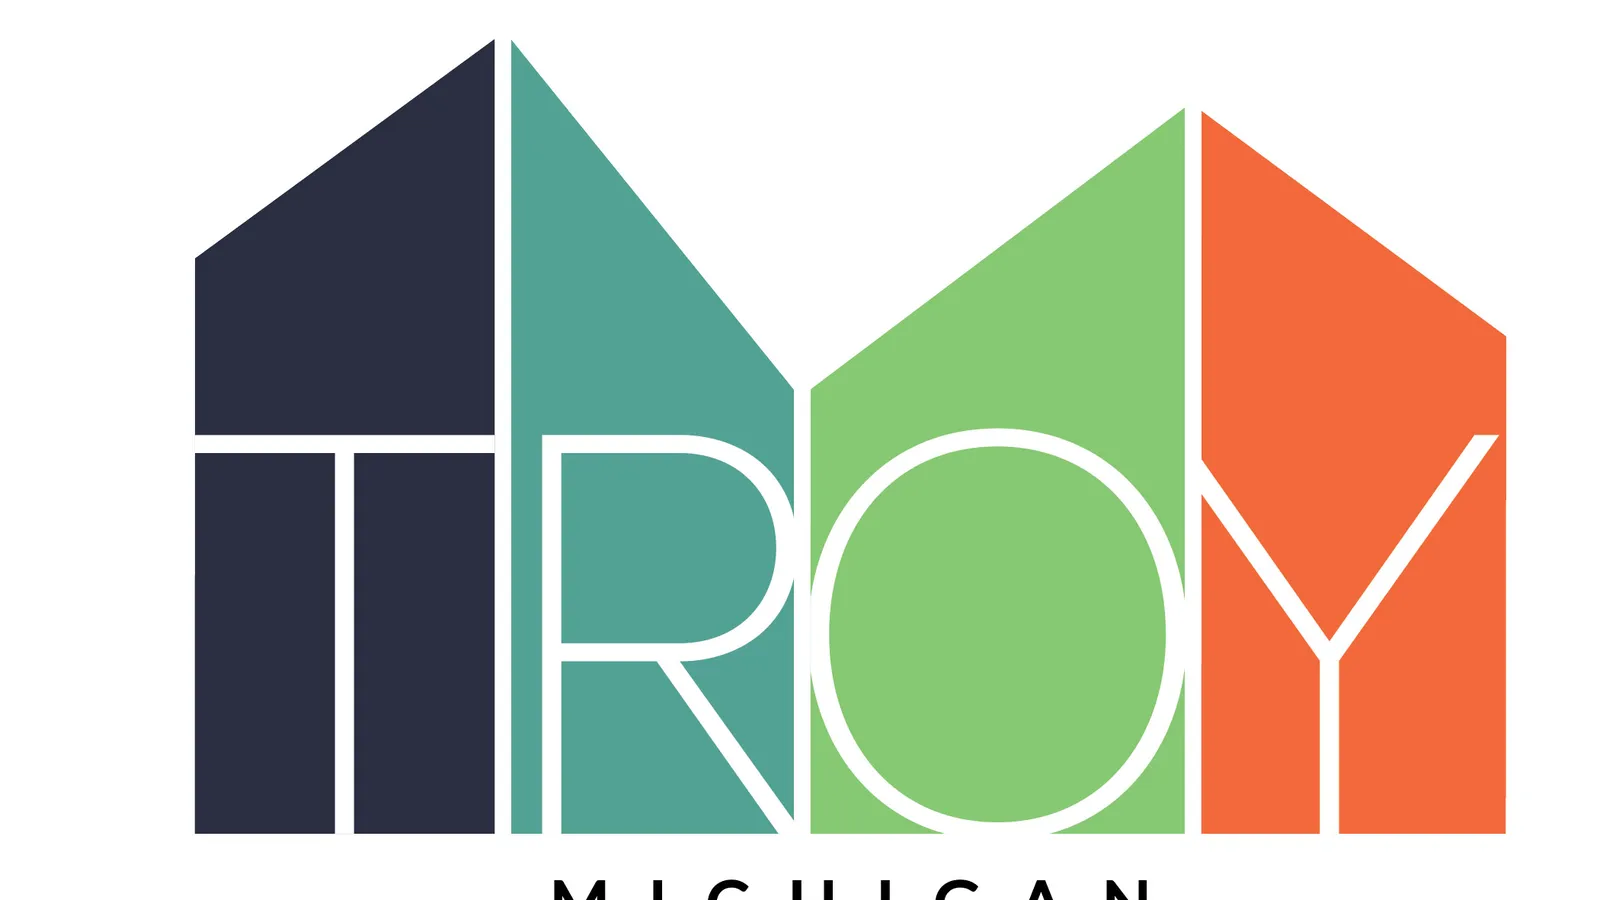 City of Troy logo